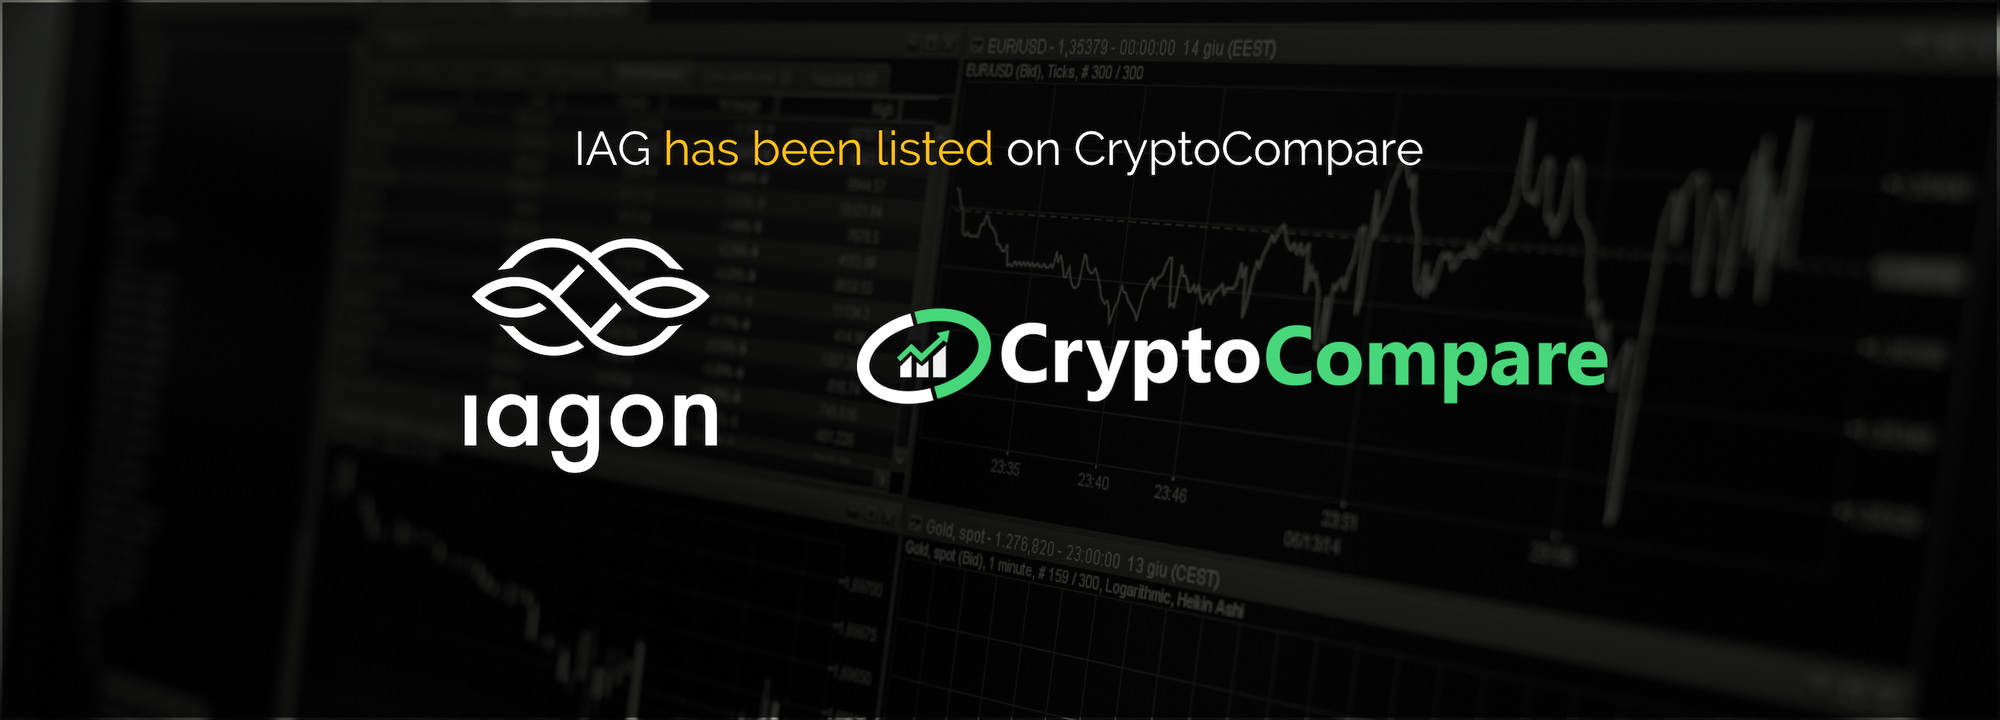 The IAGON (IAG)Token has been listed on Crypto Compare